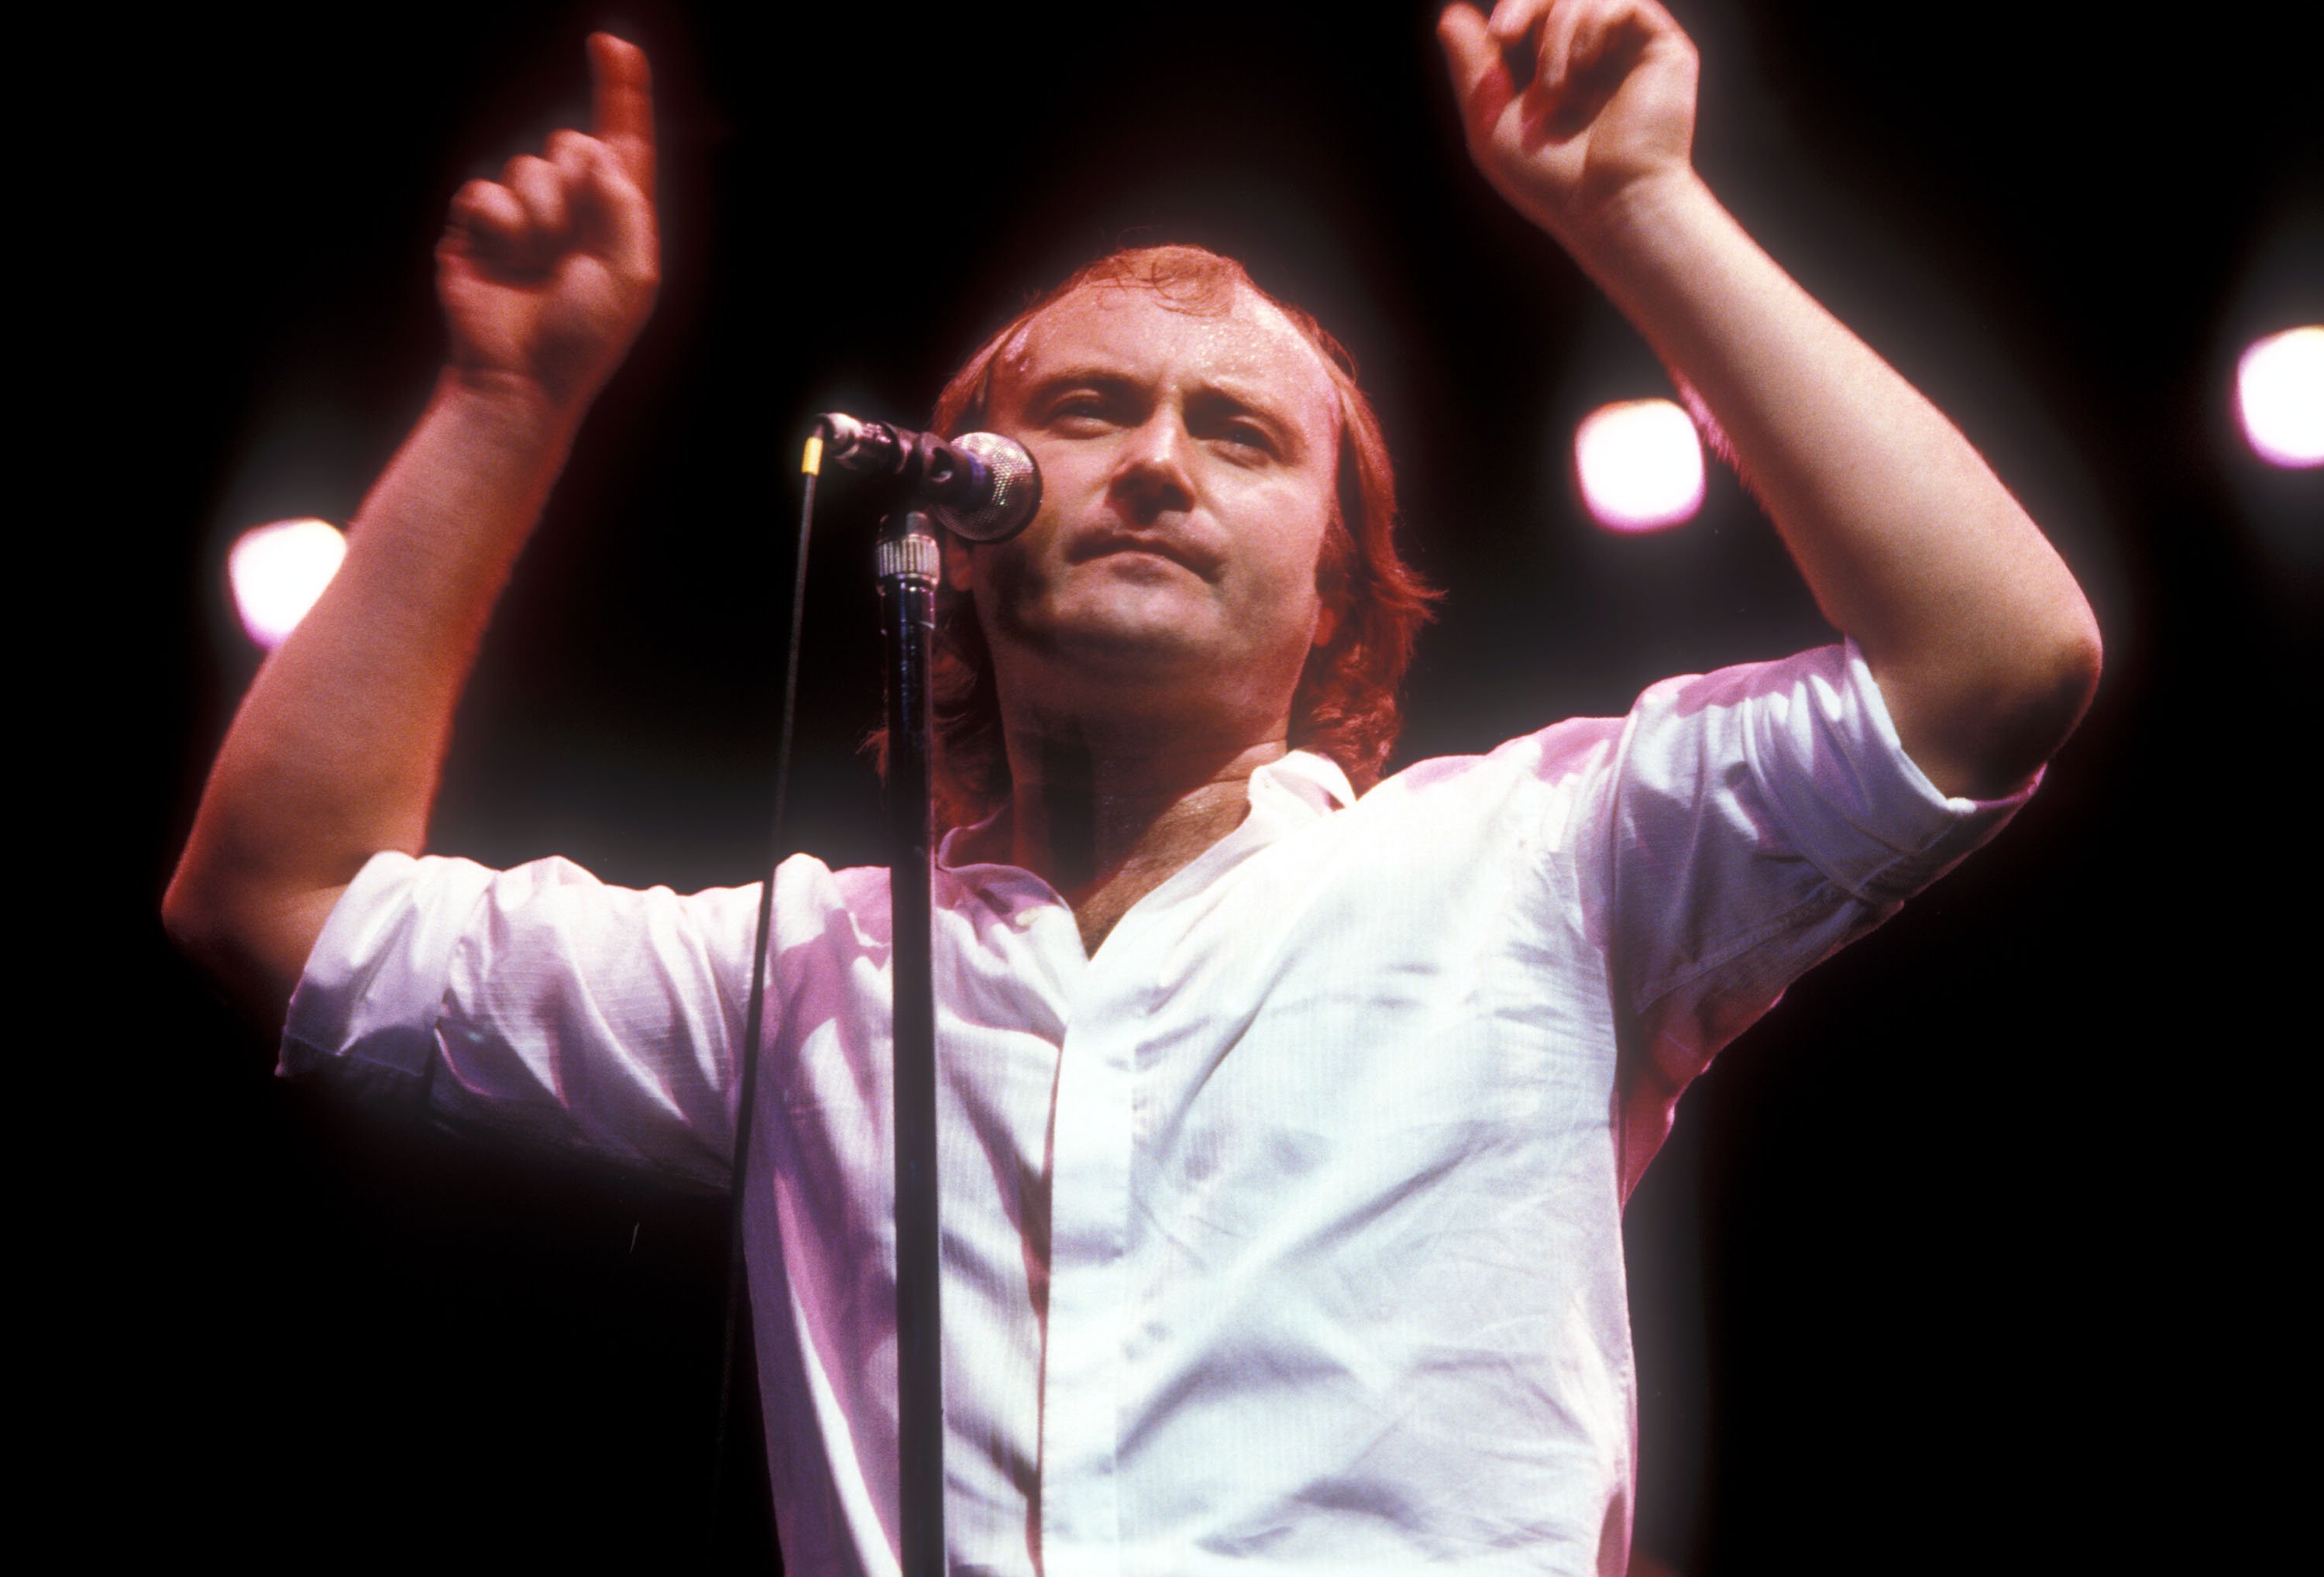 Phil Collins raising his hands